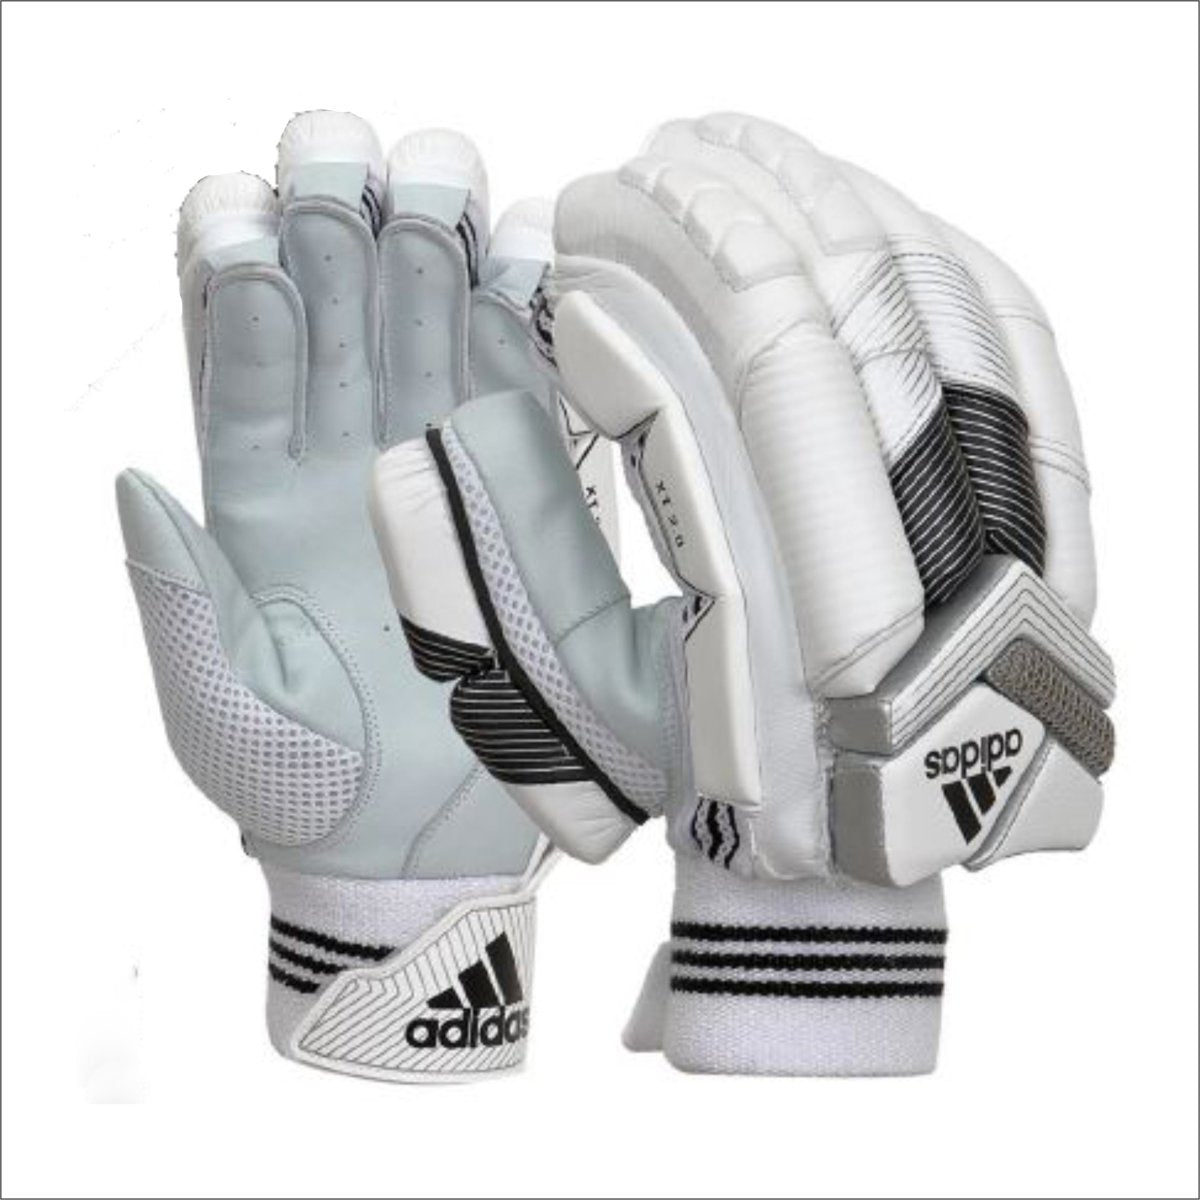 Adidas XT 2.0 Cricket Batting Gloves.